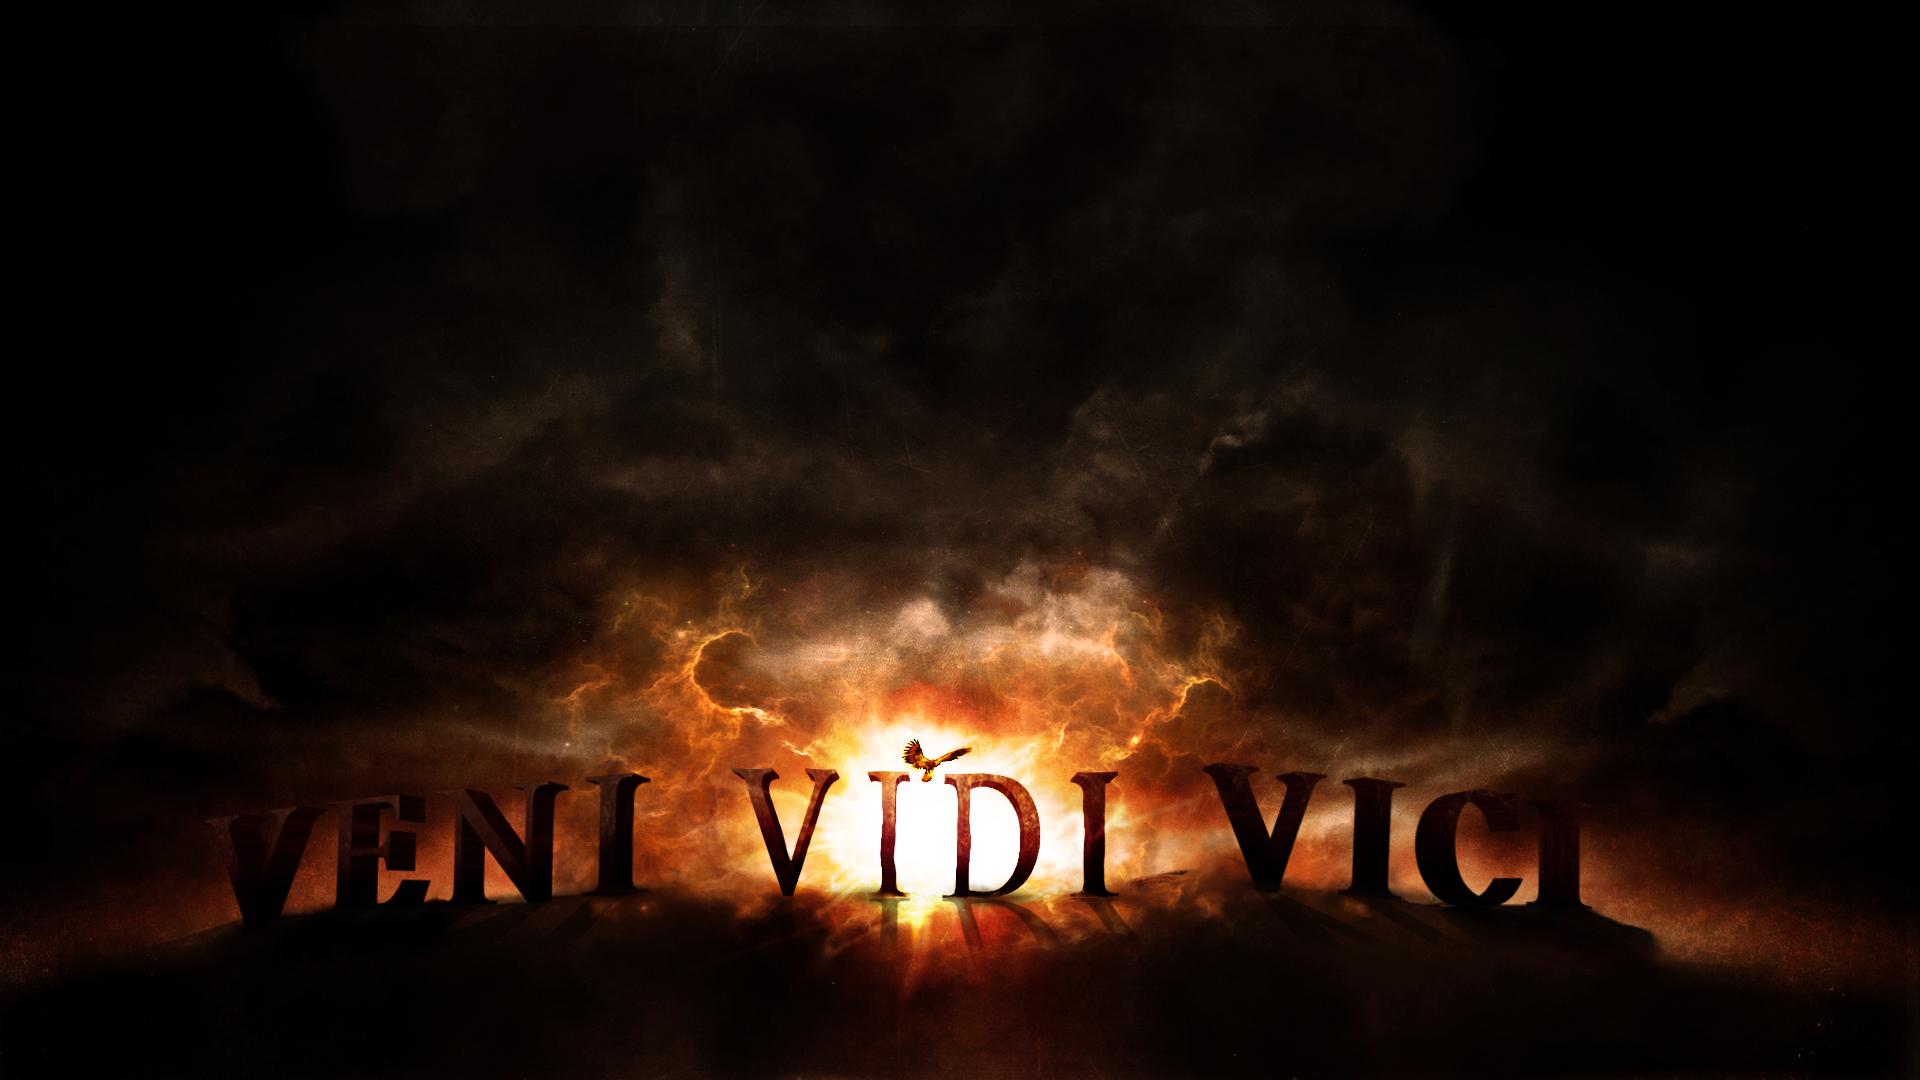 Images for forum signatures or desktop wallpapers  VVVTW Veni Vidi Vici  Total War mod for Rome Total War  Mod DB